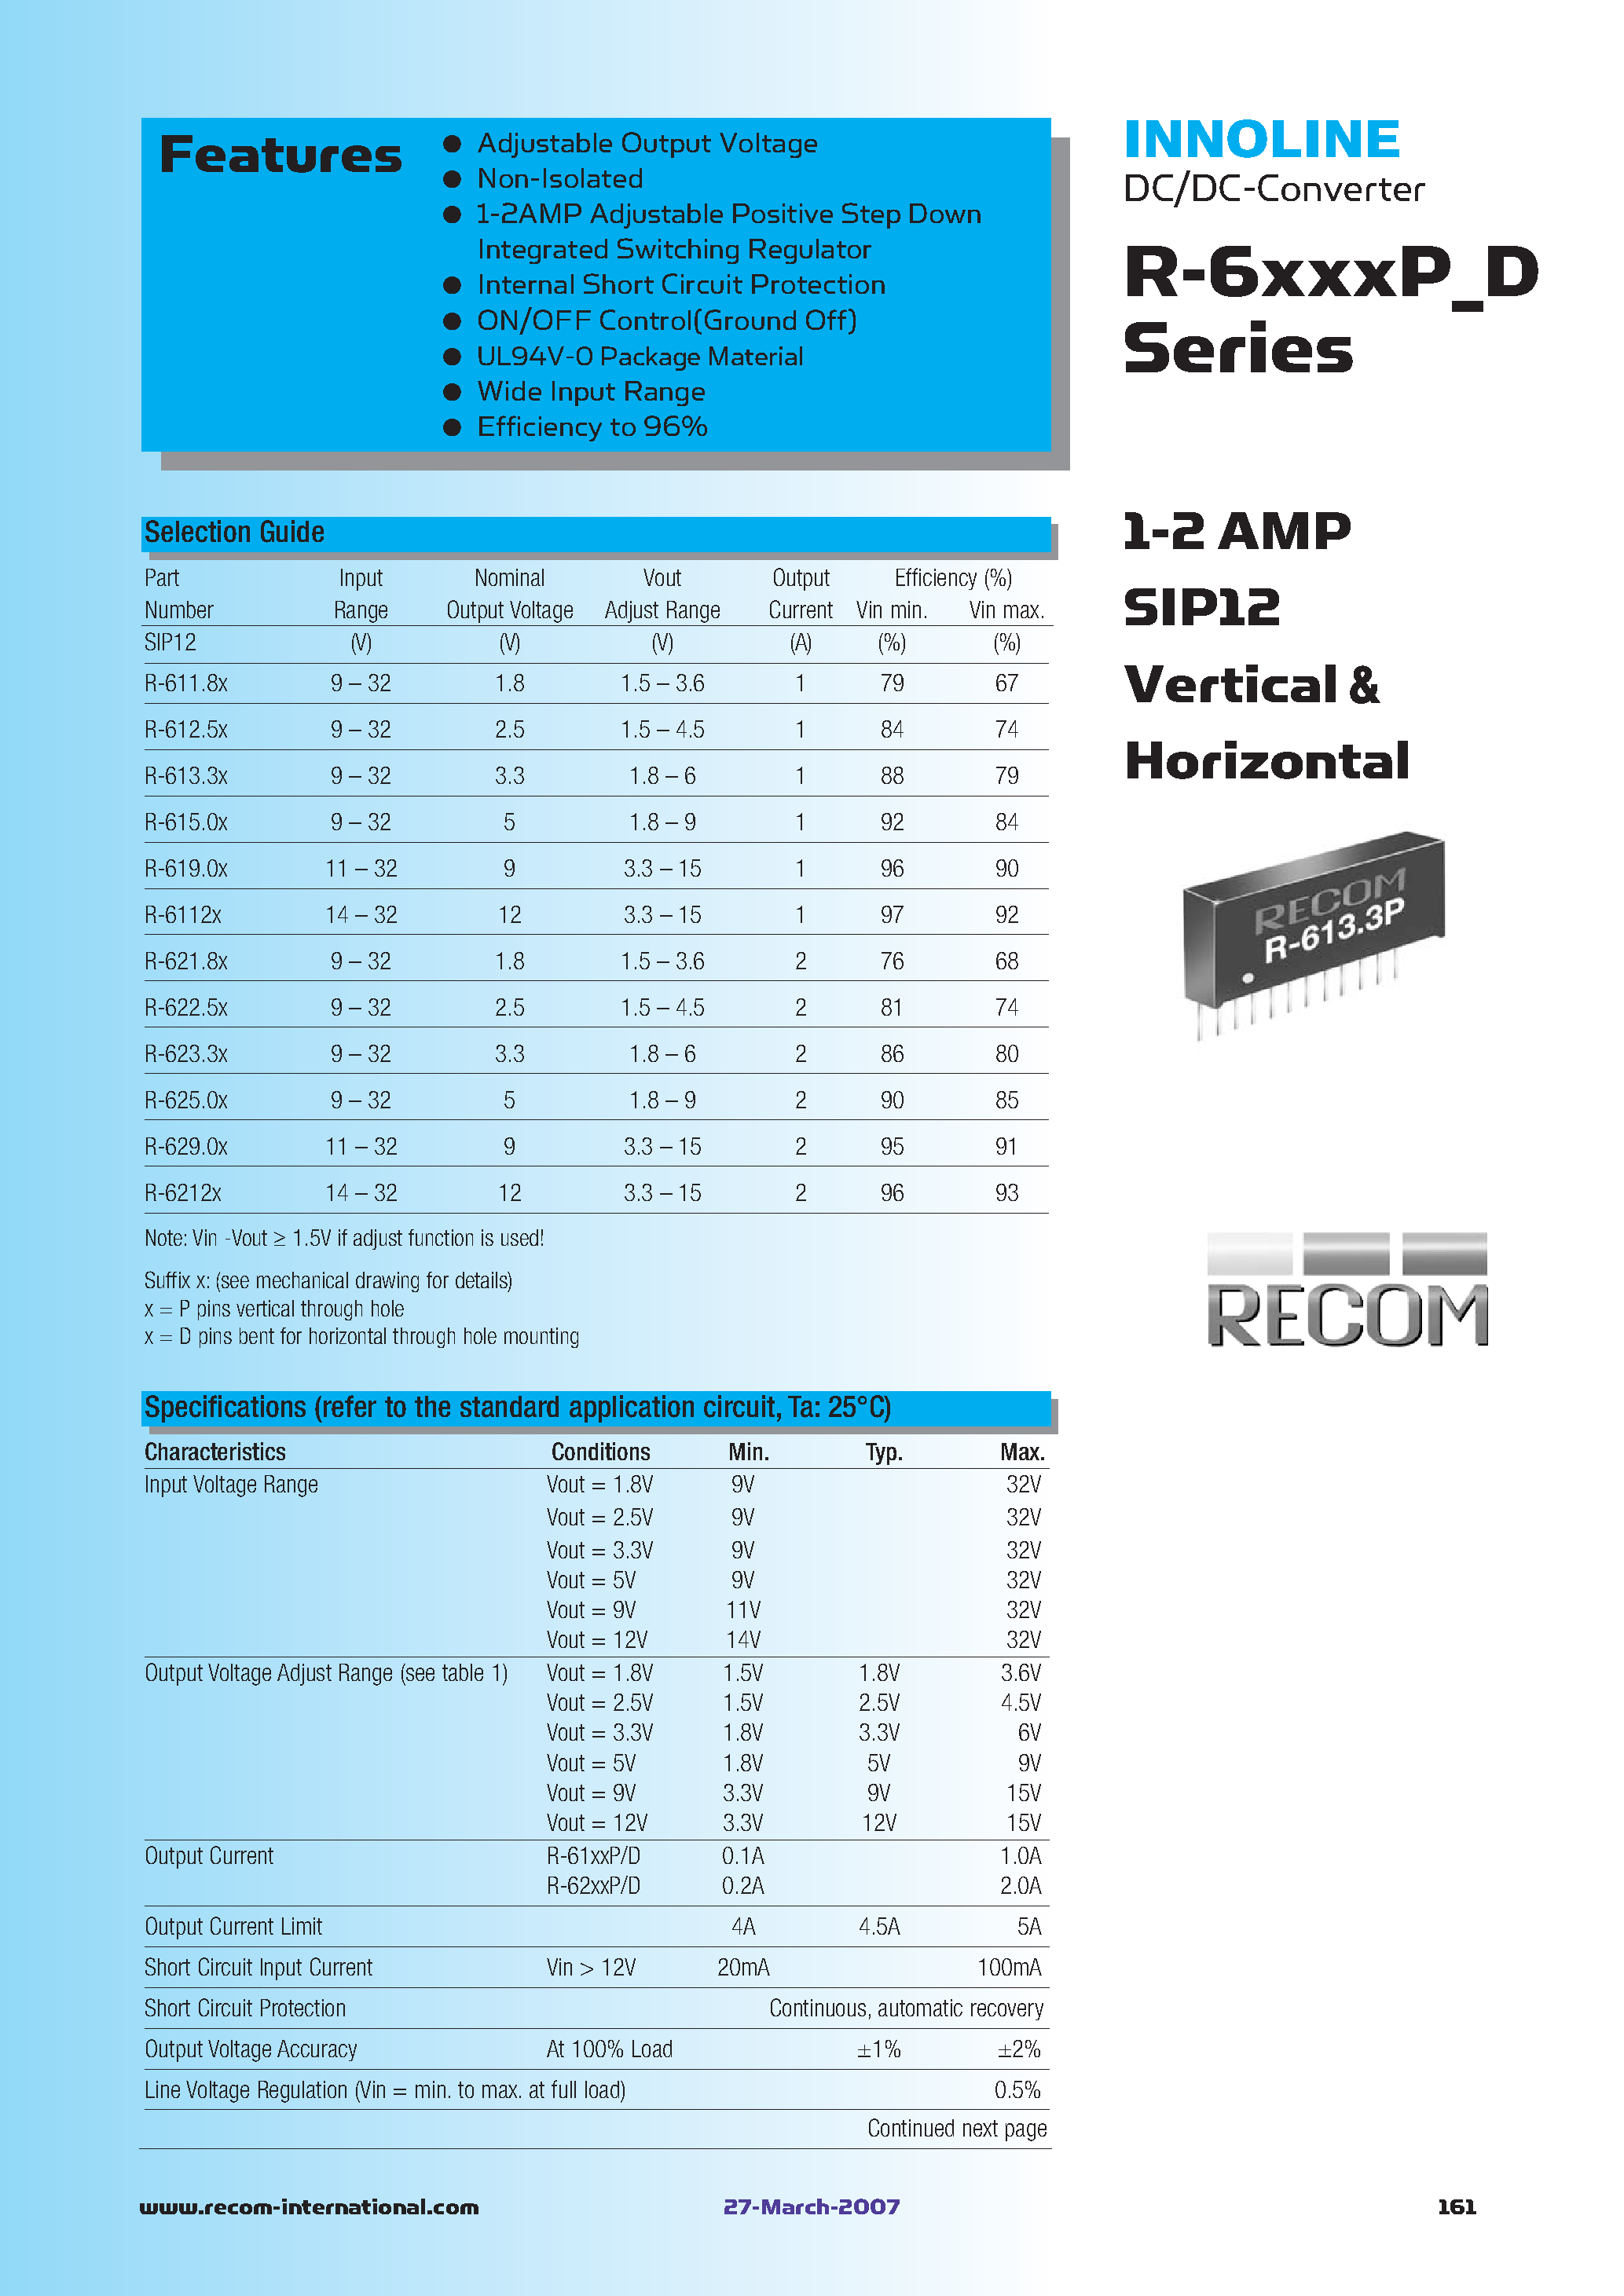 Даташит R-611.8P-1-2 AMP SIP12 Vertical & Horizontal страница 1